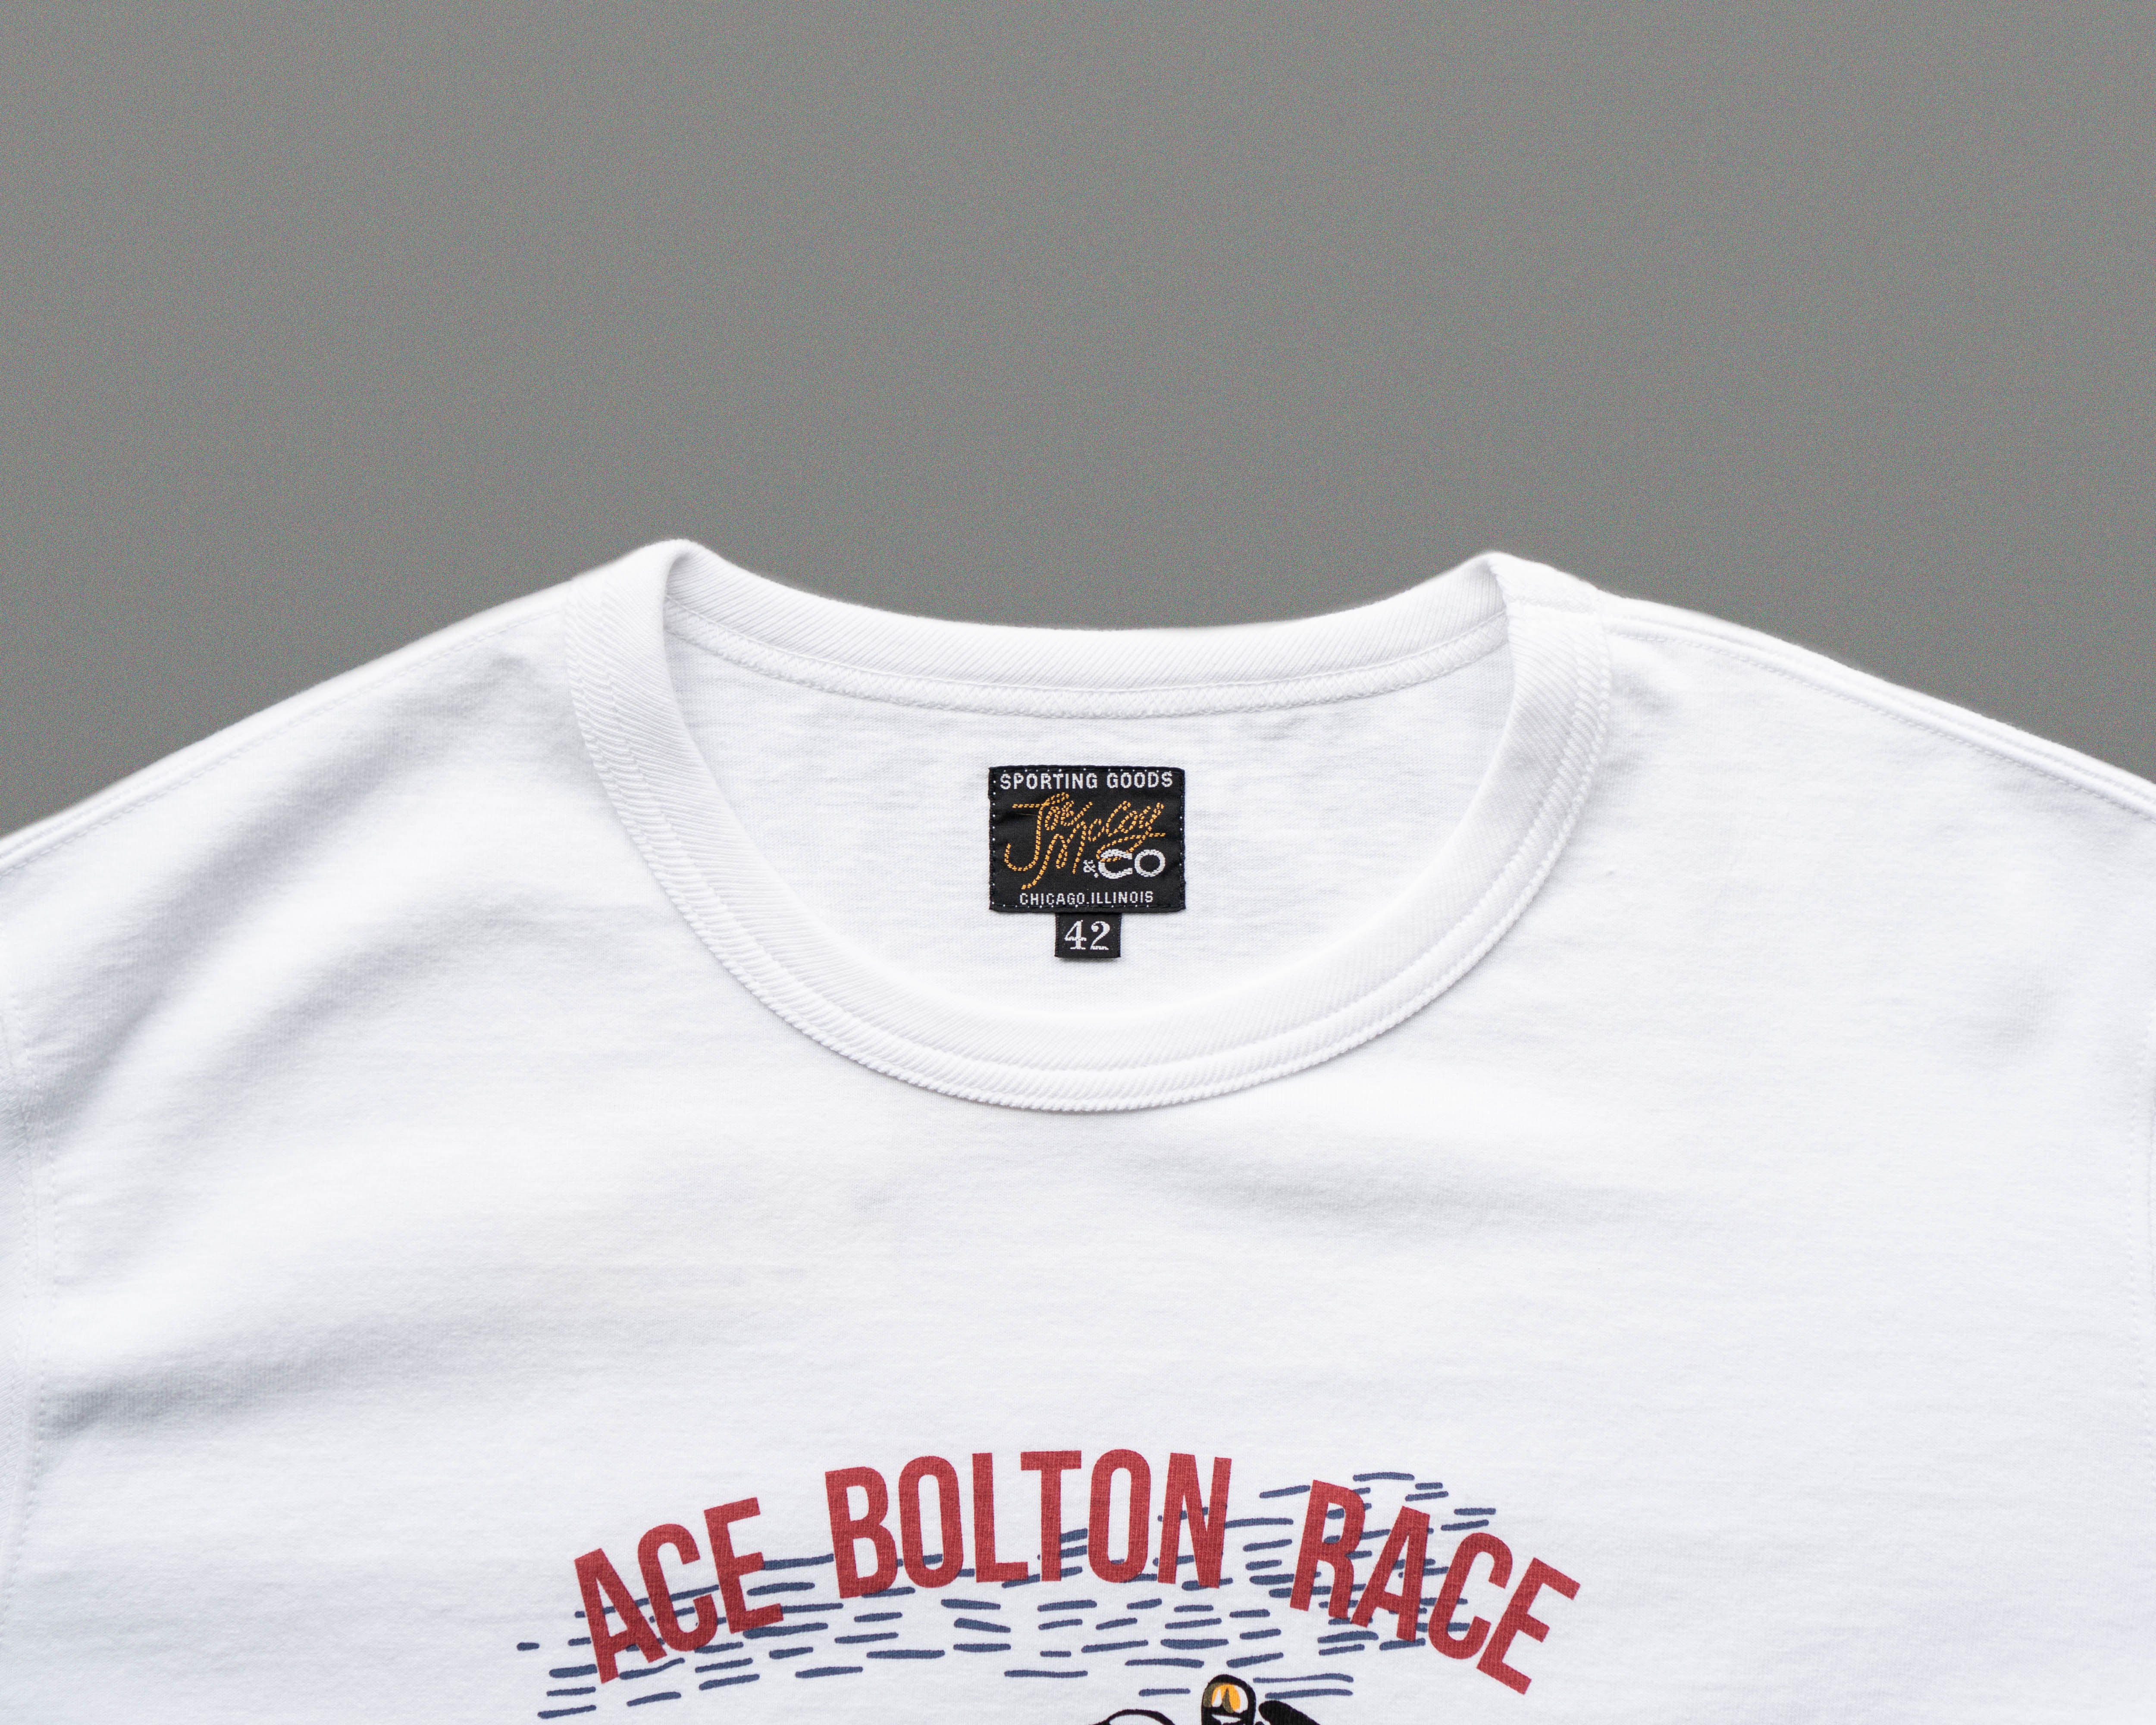 Joe McCoy Tee / Ace Bolton Race | MC18026